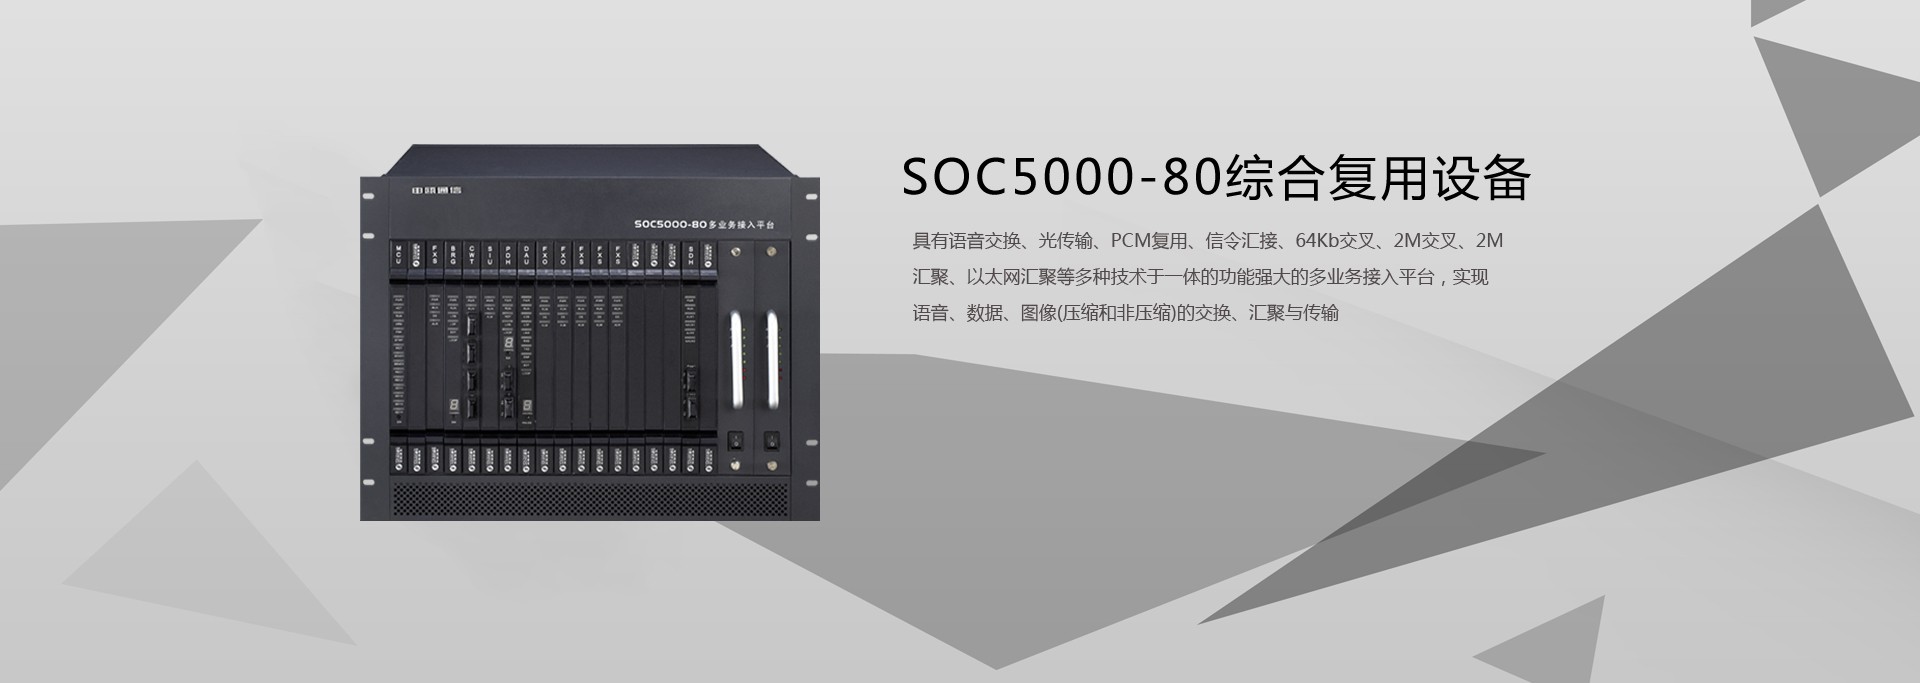 SOC5000-80光纤多业务程控交换机